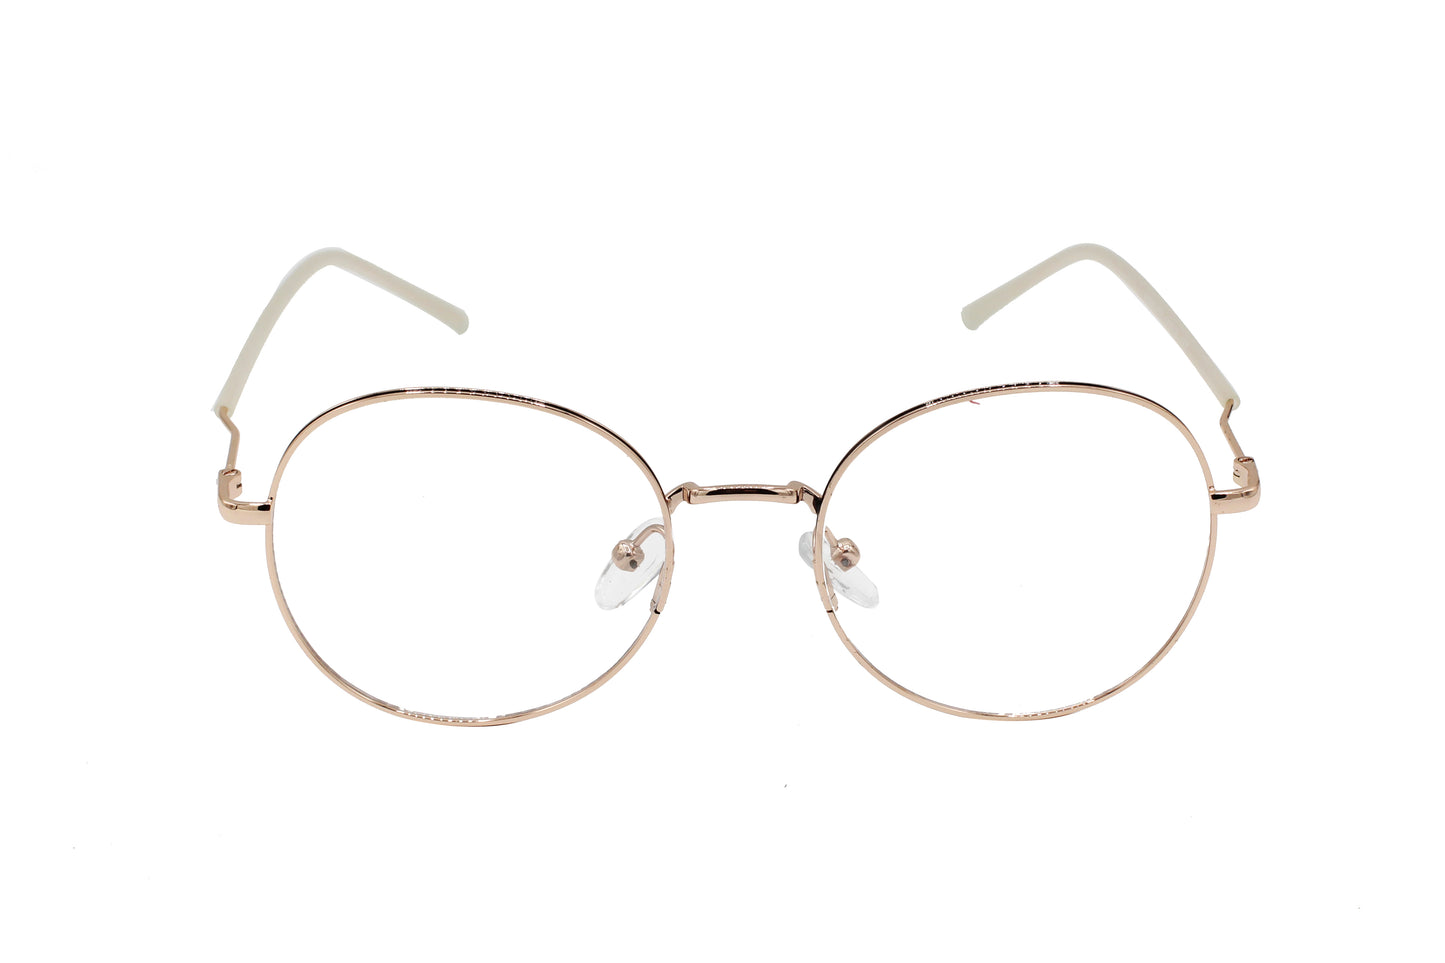 NS Classic - 6060 - Golden - Eyeglasses